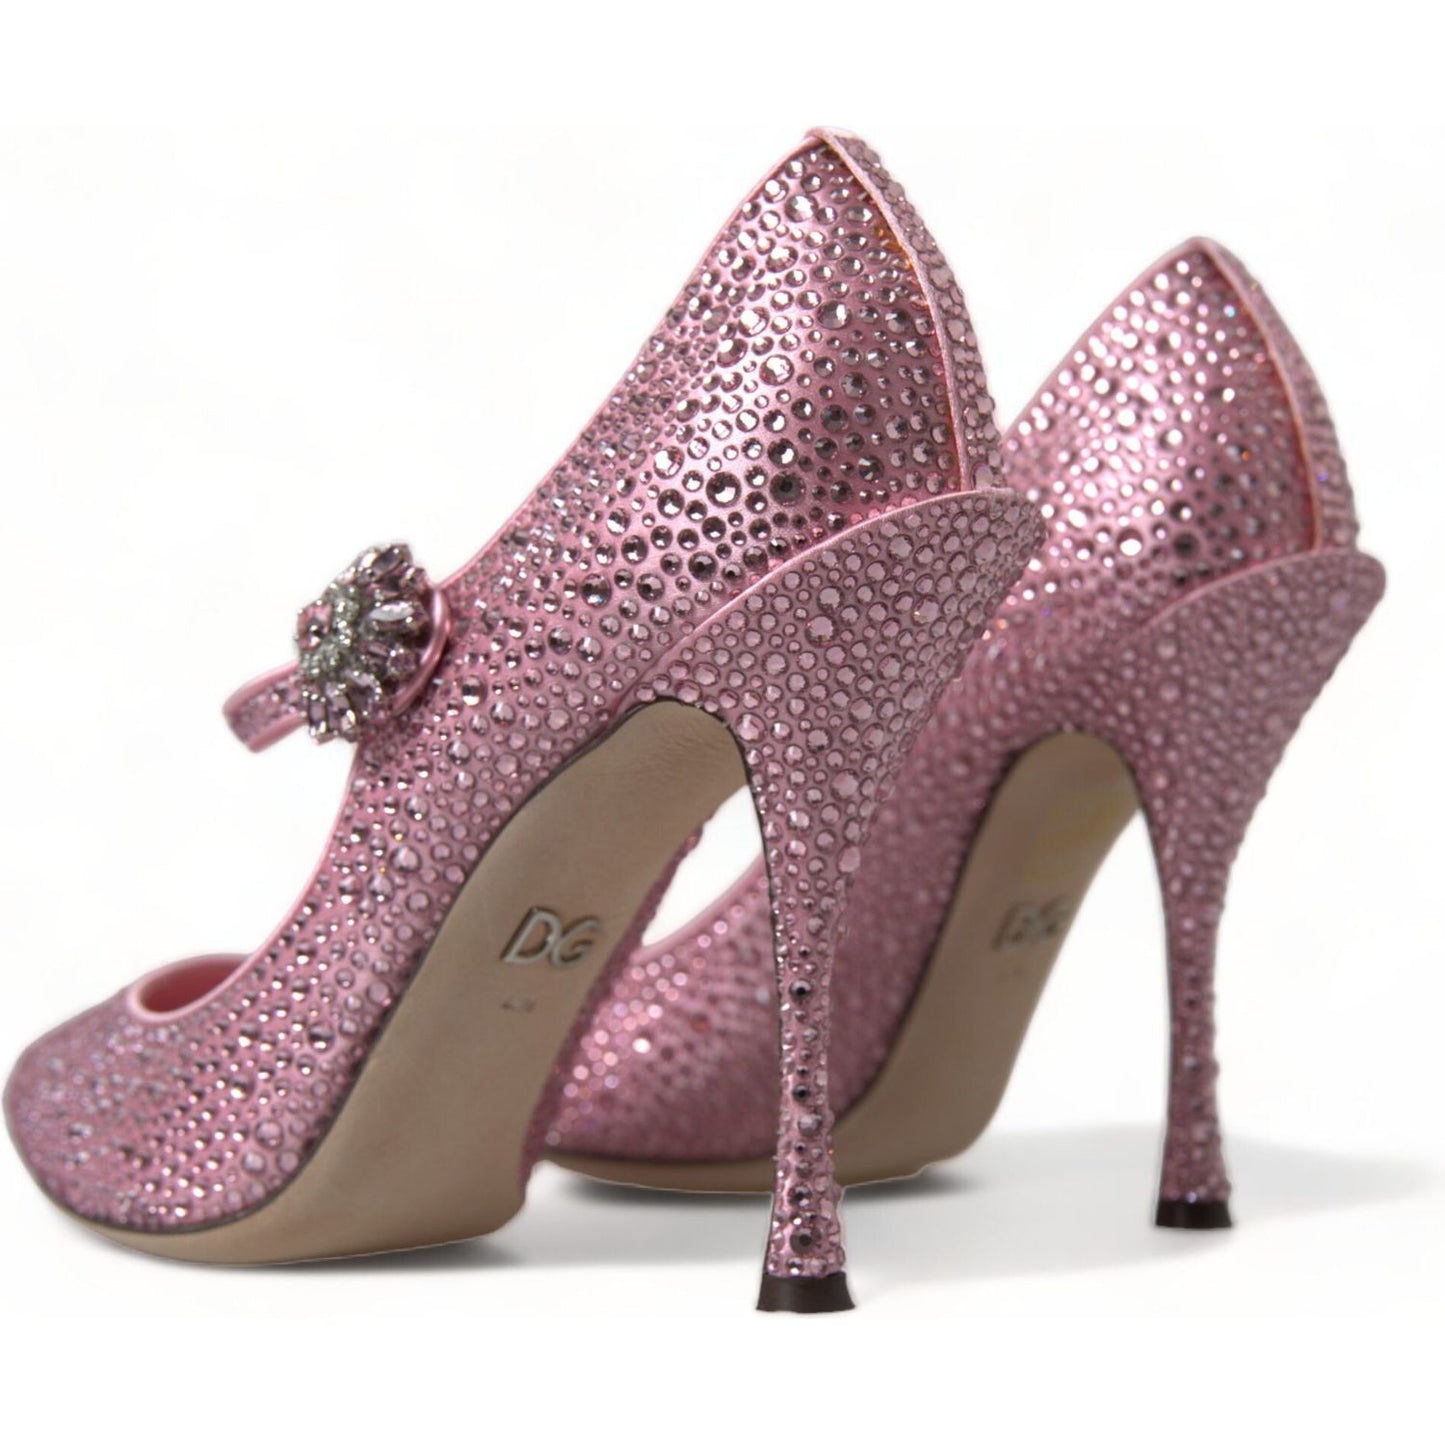 Dolce & Gabbana Enchanting Pink Crystal Pumps pink-strass-crystal-heels-pumps-shoes 465A9309-bg-scaled-b2a4d736-fdb.jpg